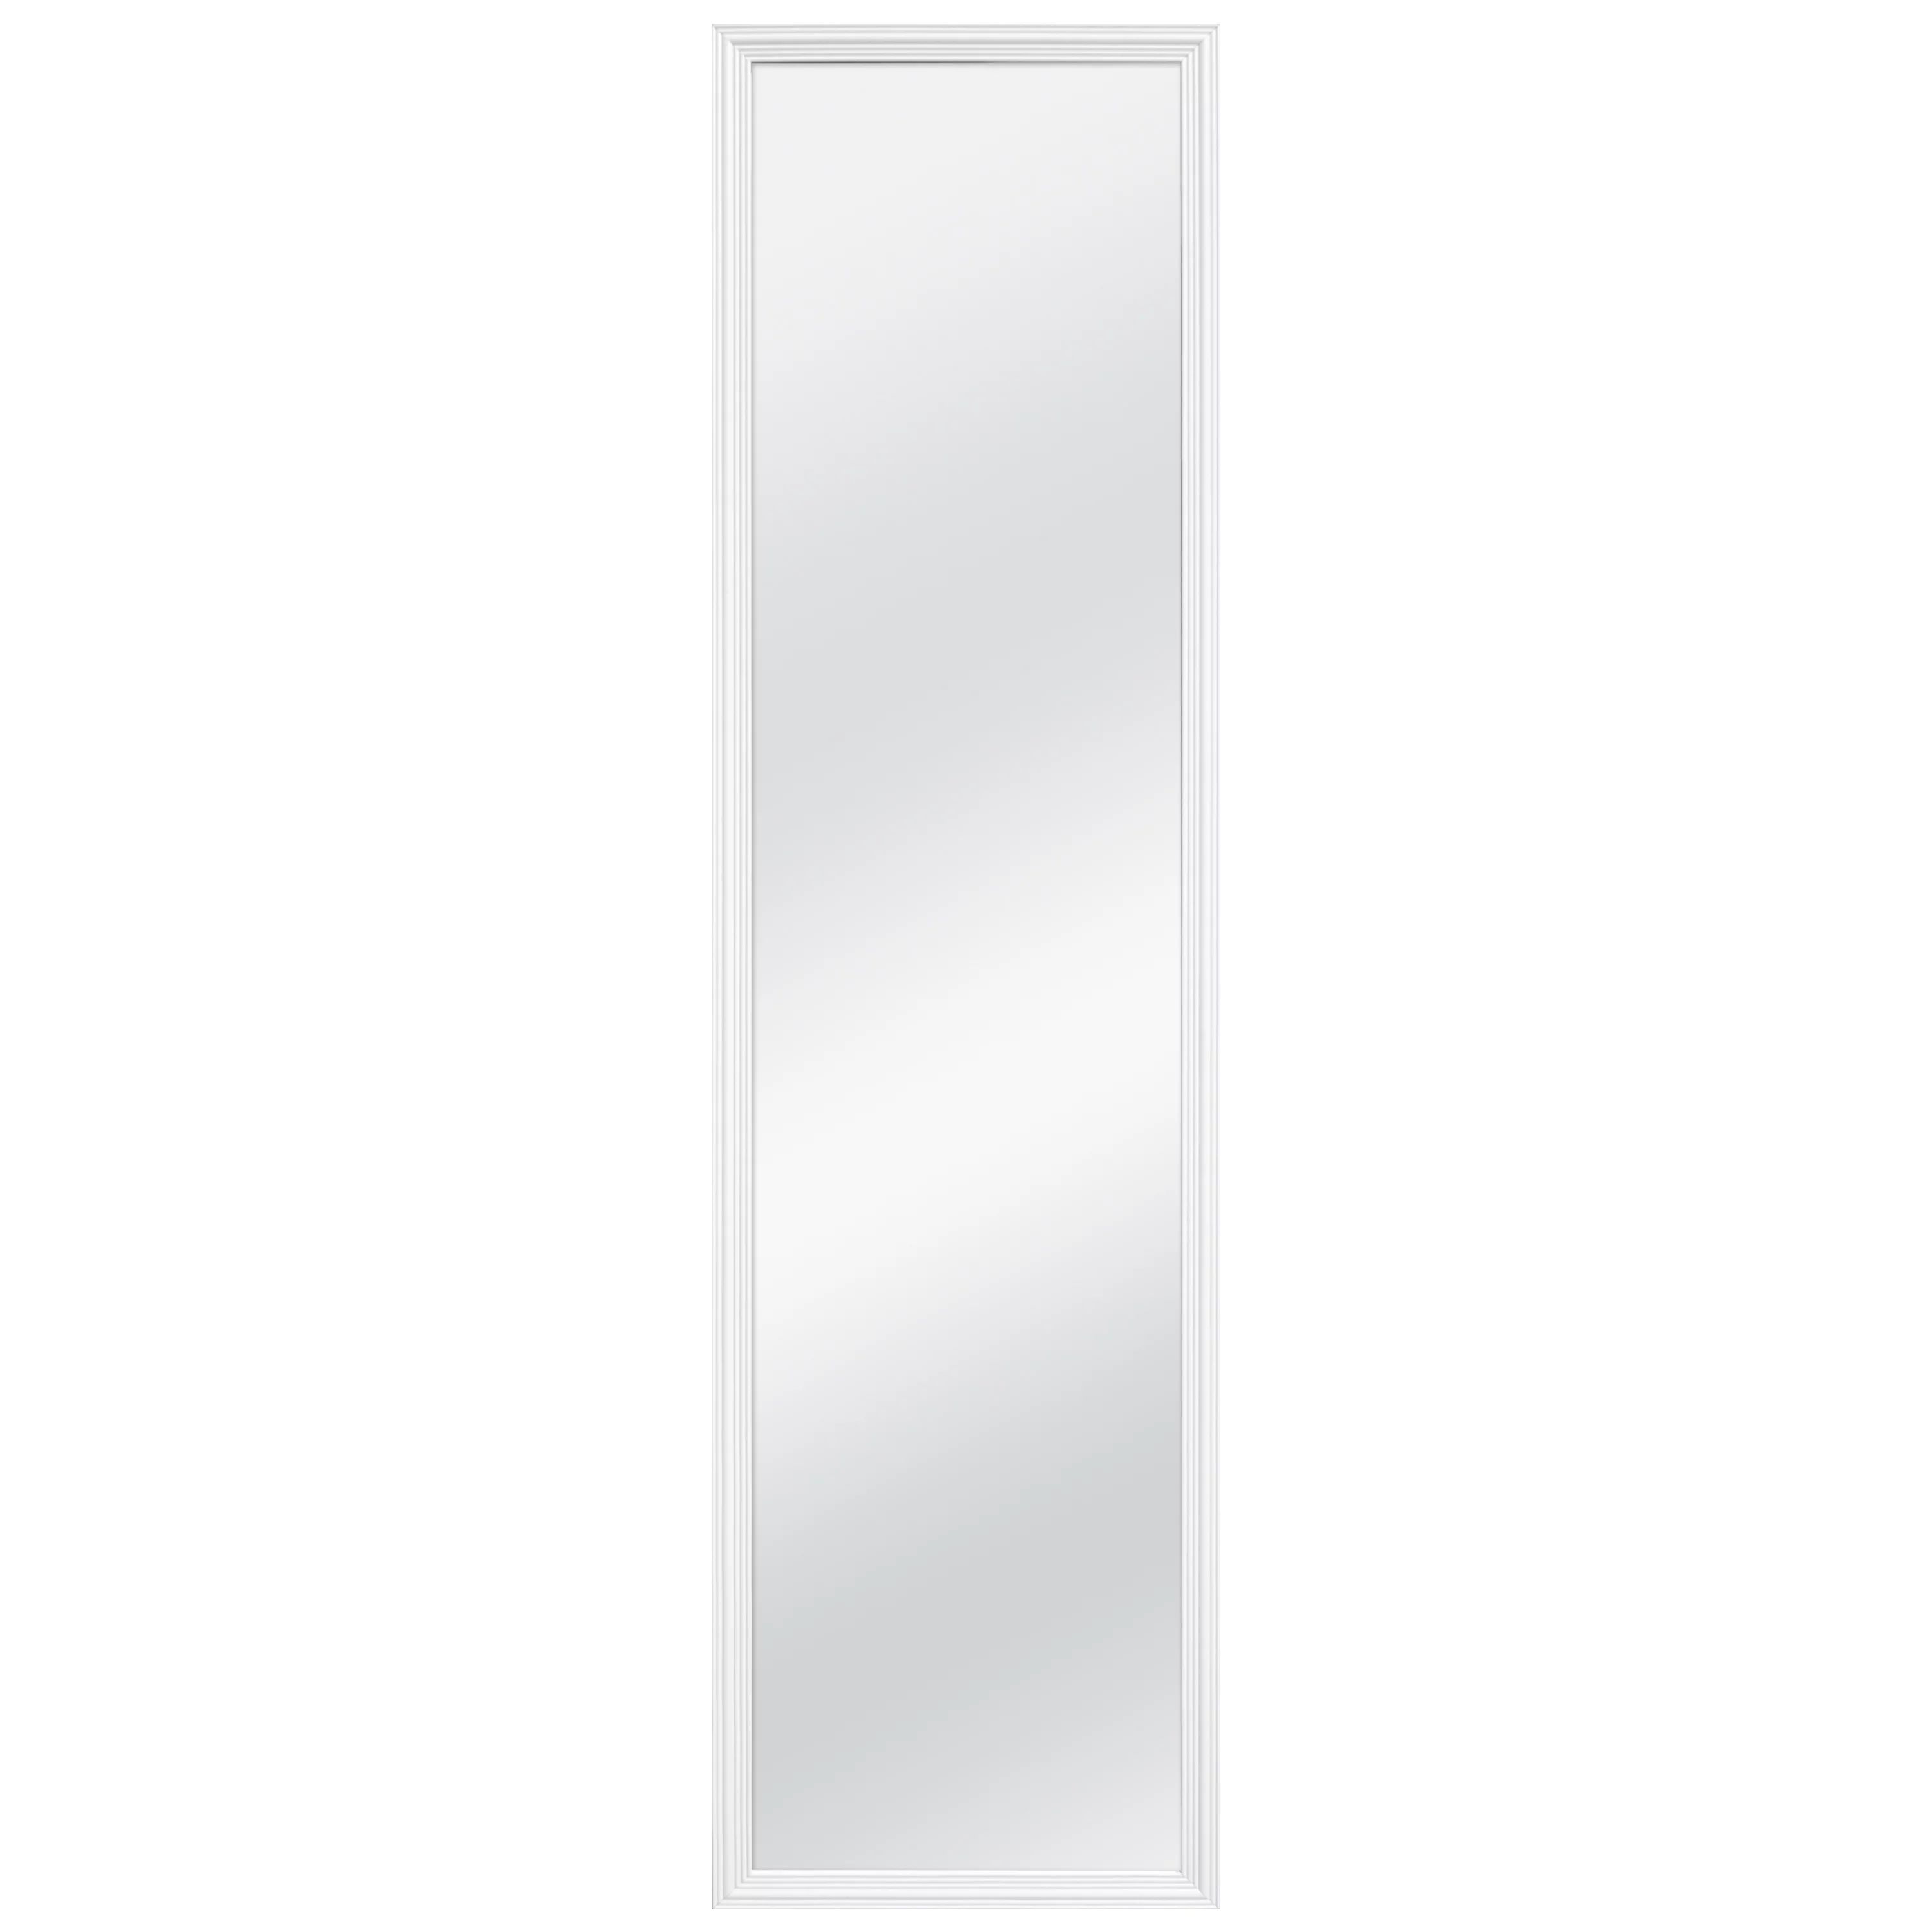 Mainstays Door Mirror, 13.38IN X 49.38IN, White Finish | Walmart (US)